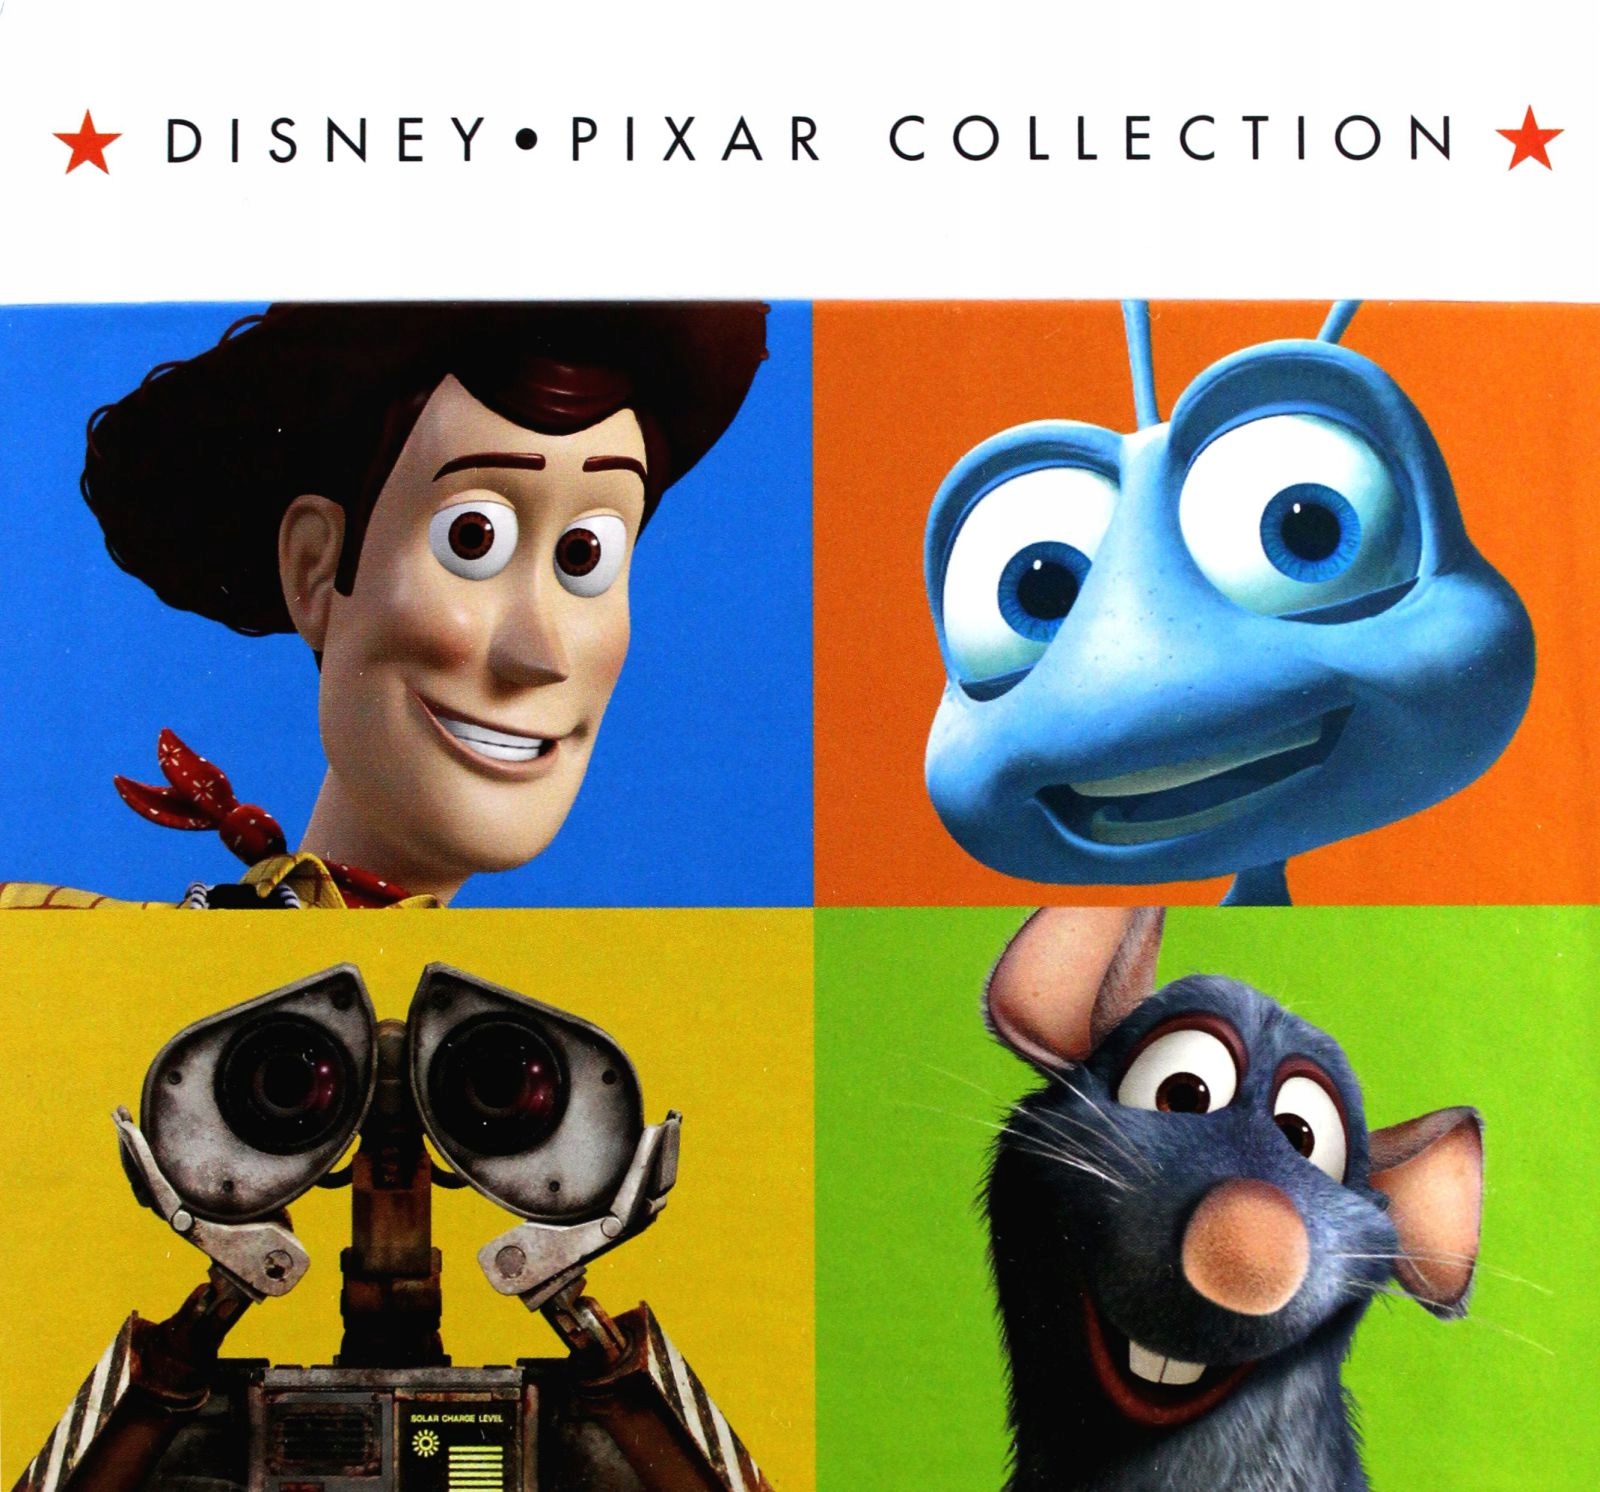 Pixar collection. Disney Pixar collection Blu-ray.